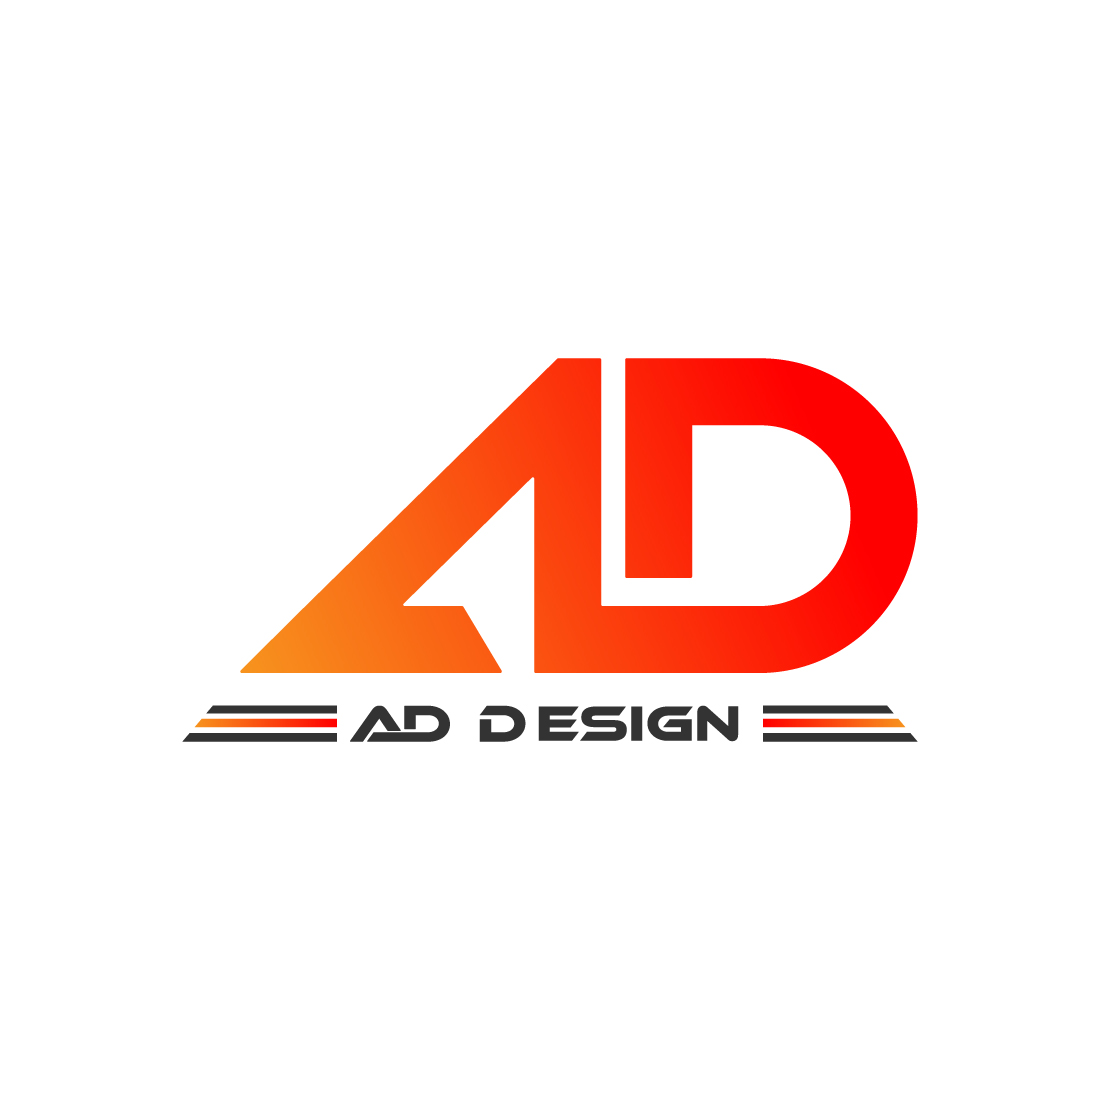 Initials AD letters logo design vector orange color best company identity AD logo design best royalty icon DA logo design template icon images design preview image.